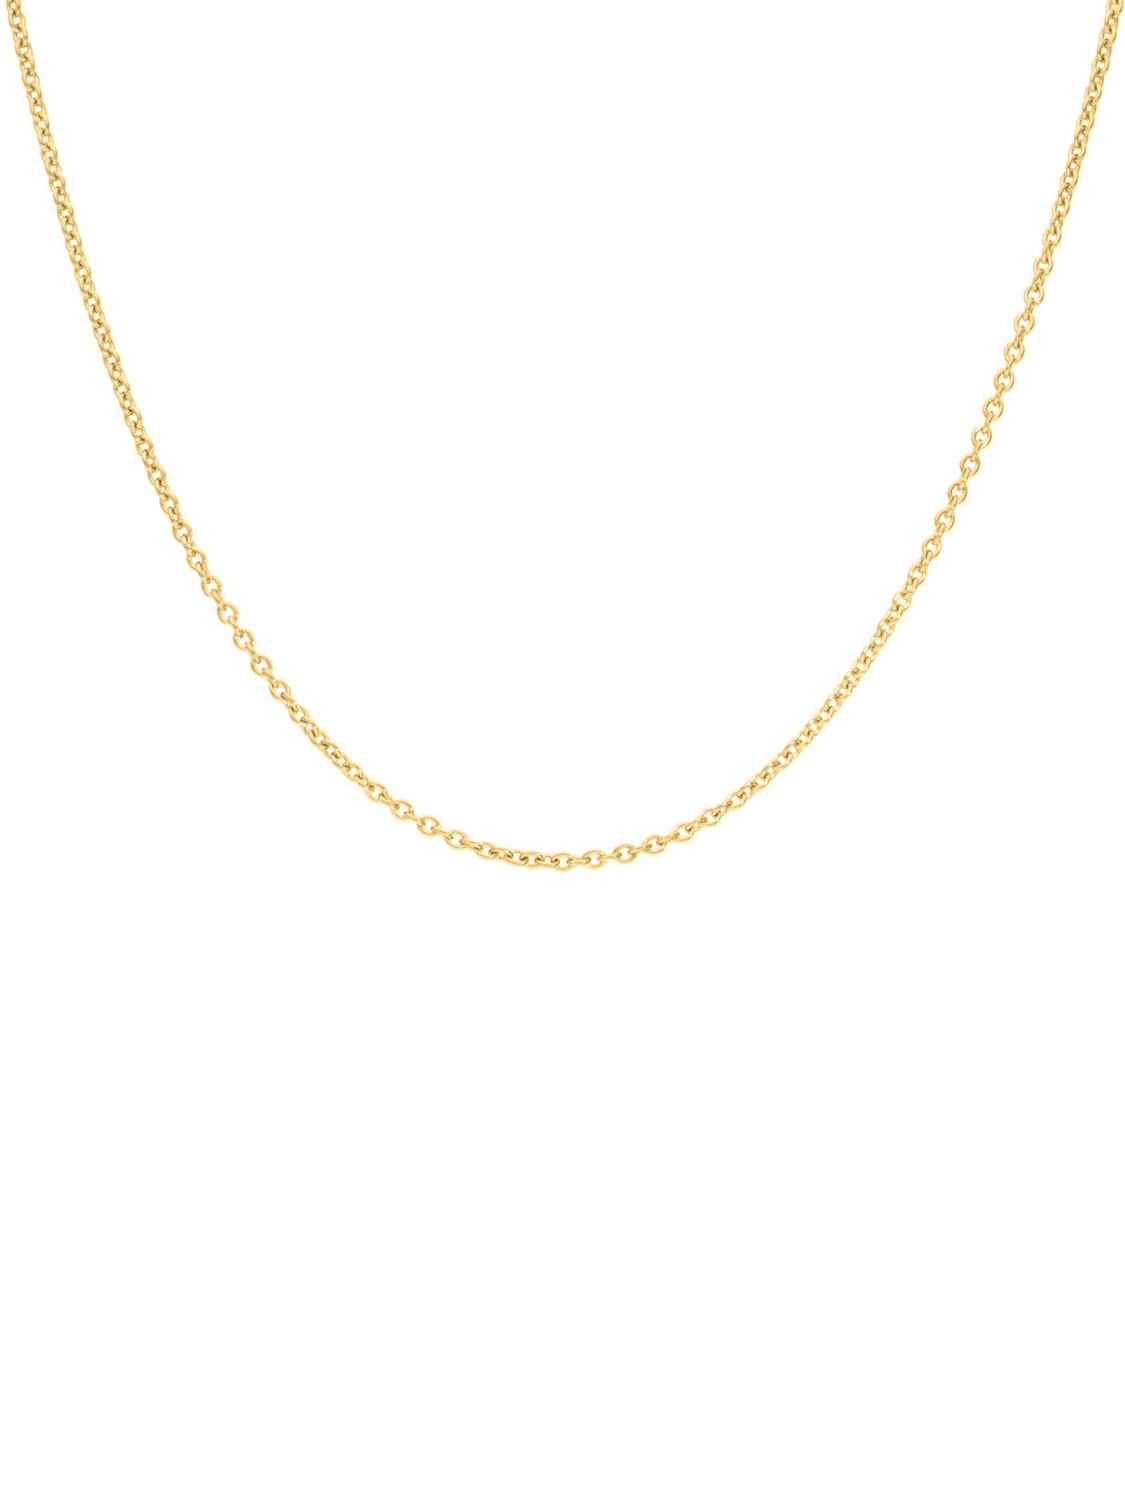 Kordoubt - Goldkette 333, 585 Gelbgold ODER Silber vergoldet Federring - Breite 1,5mm